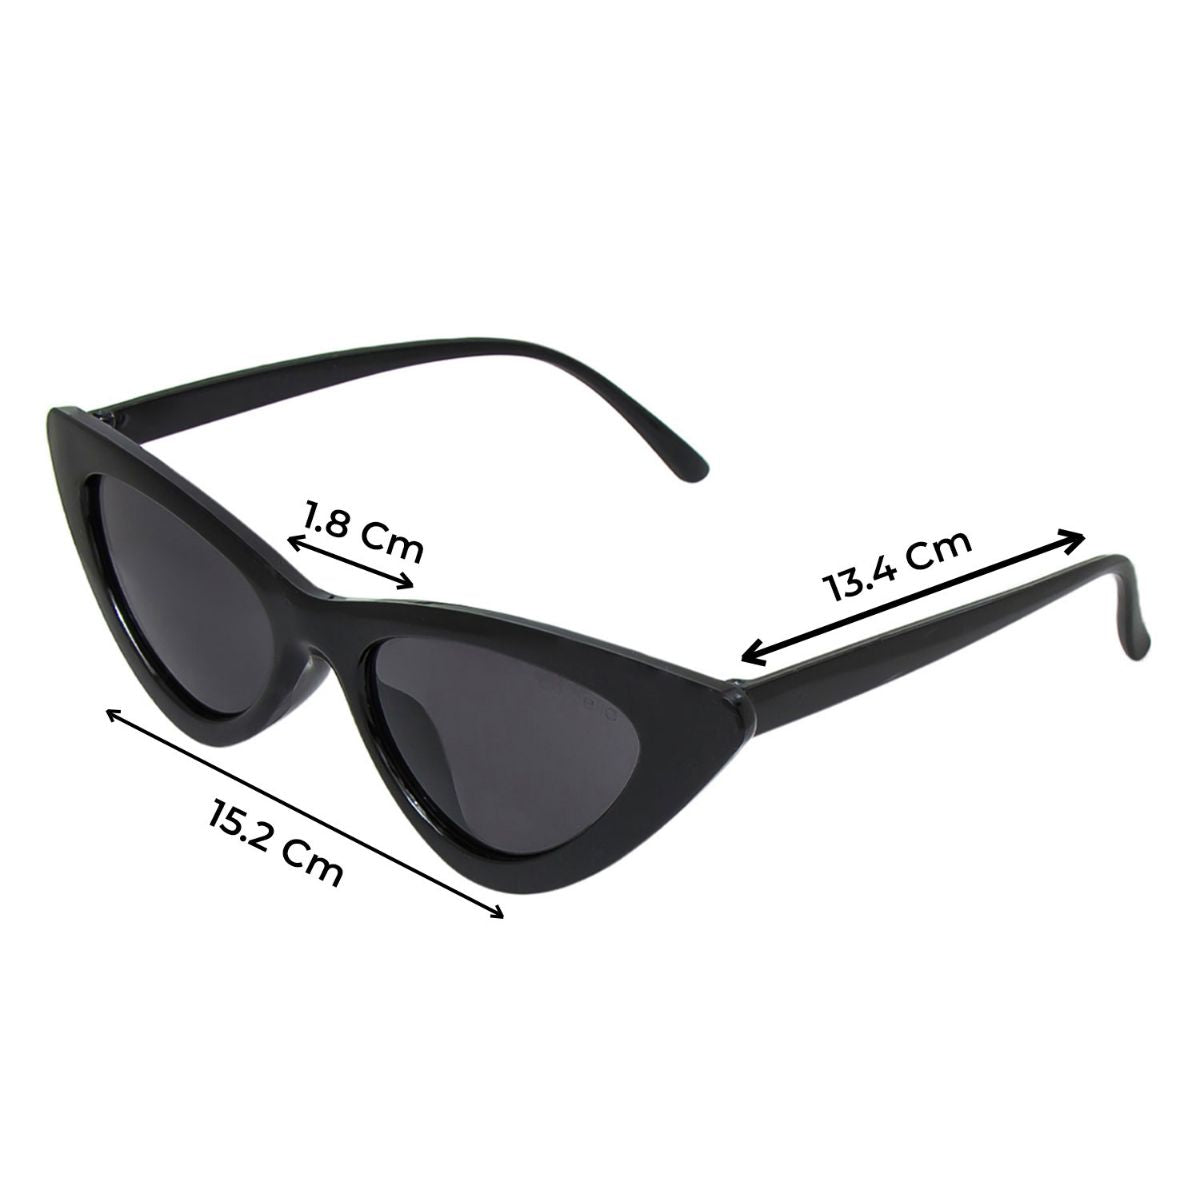 Buy Cateye Sunglasses - 2 Sunglasses @999 - Woggles